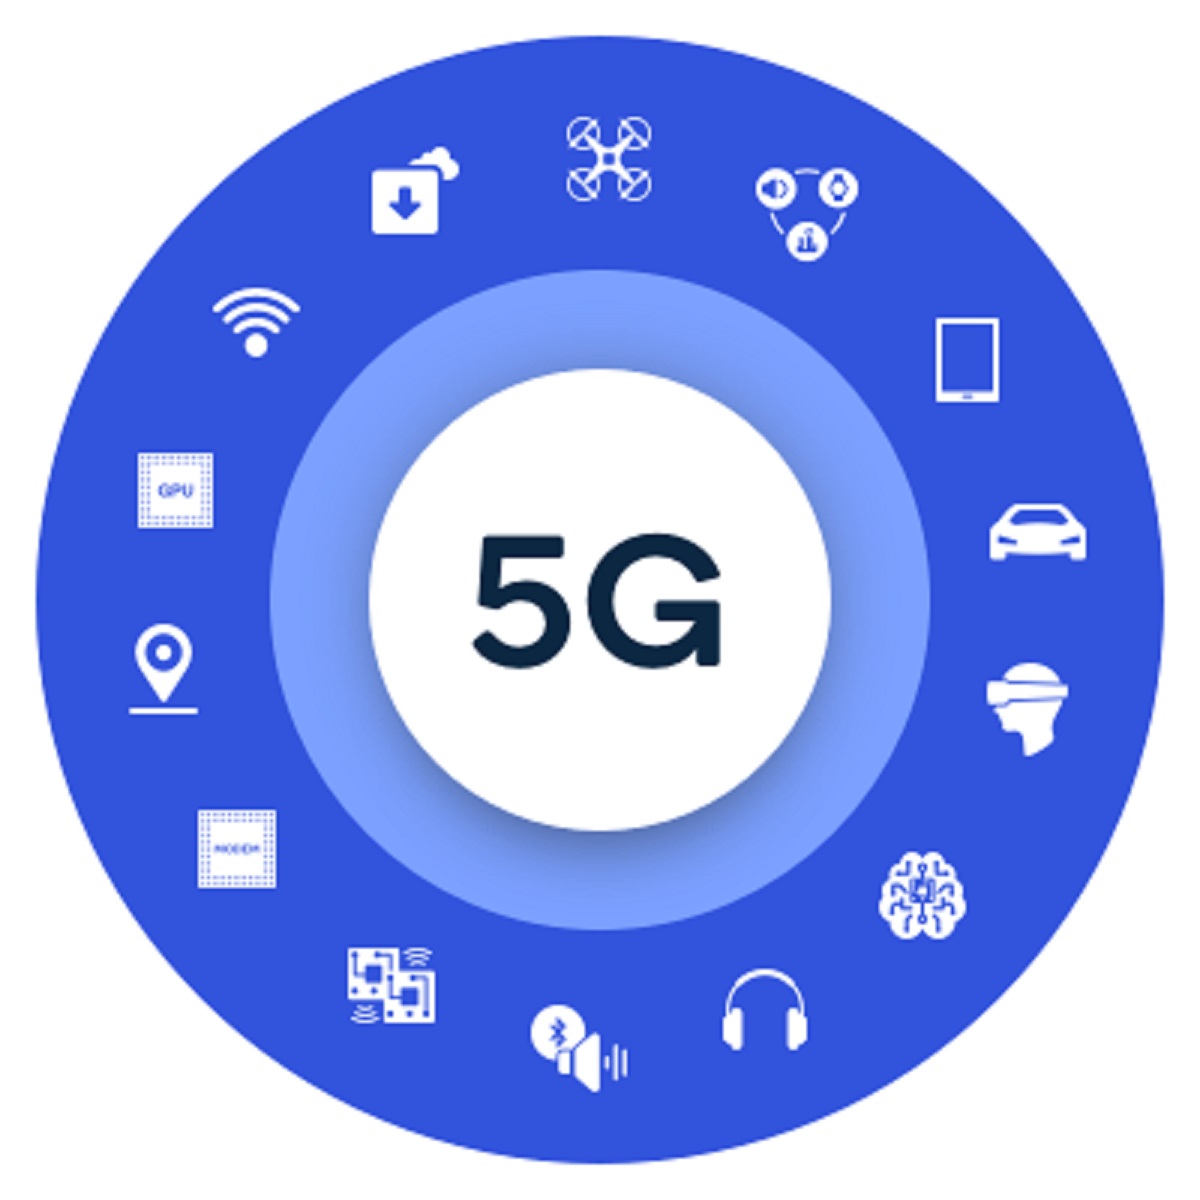 شبکه 5G چیست؟